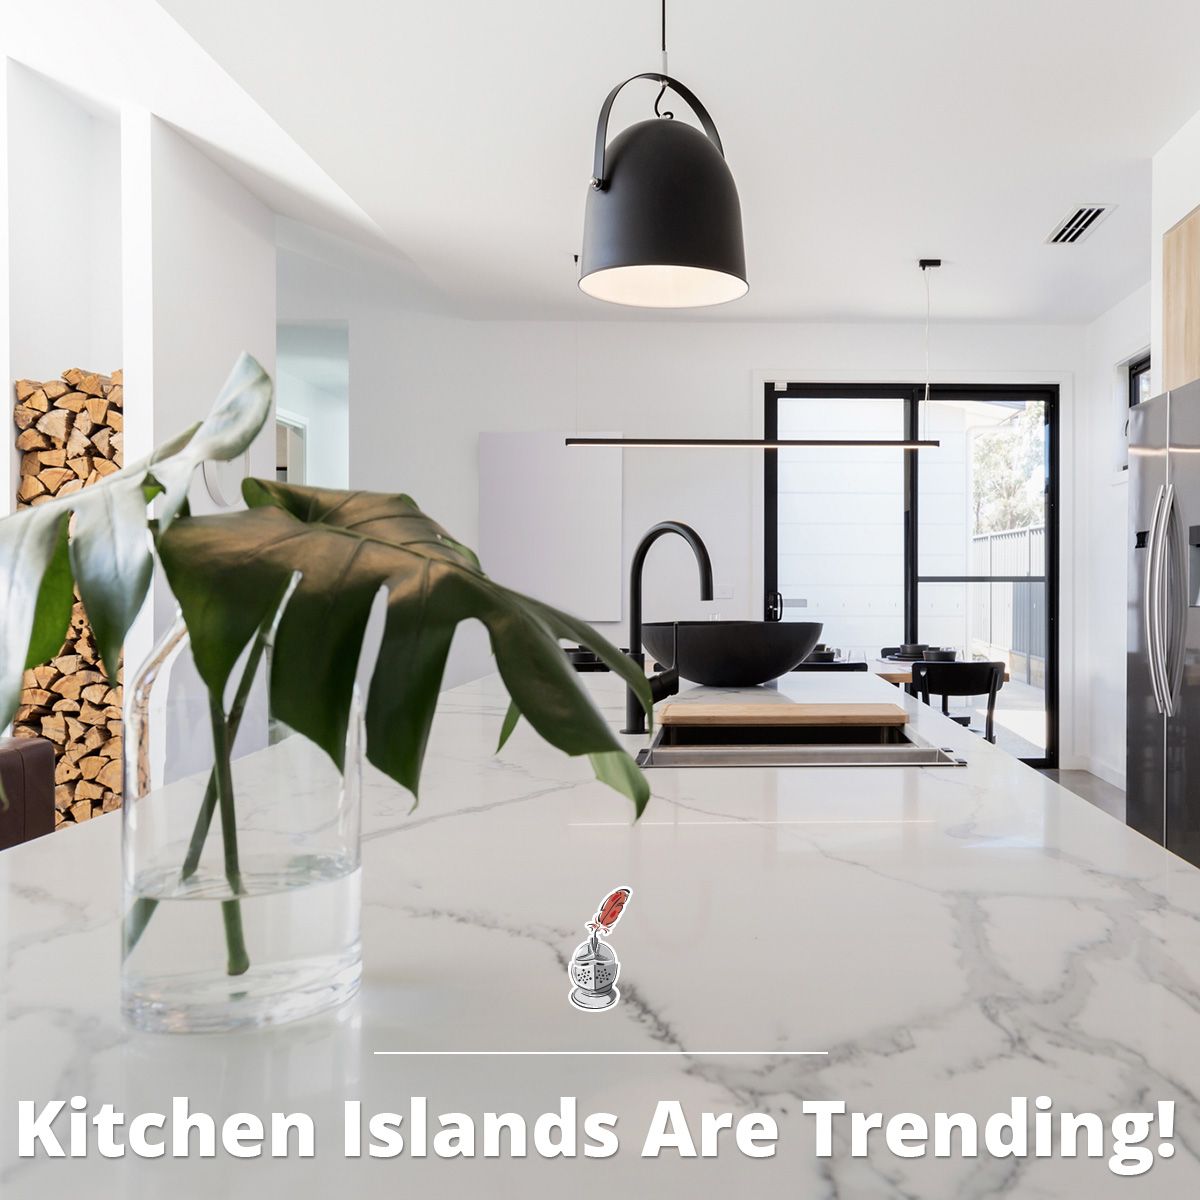 Kitchen Islands Are Trending!